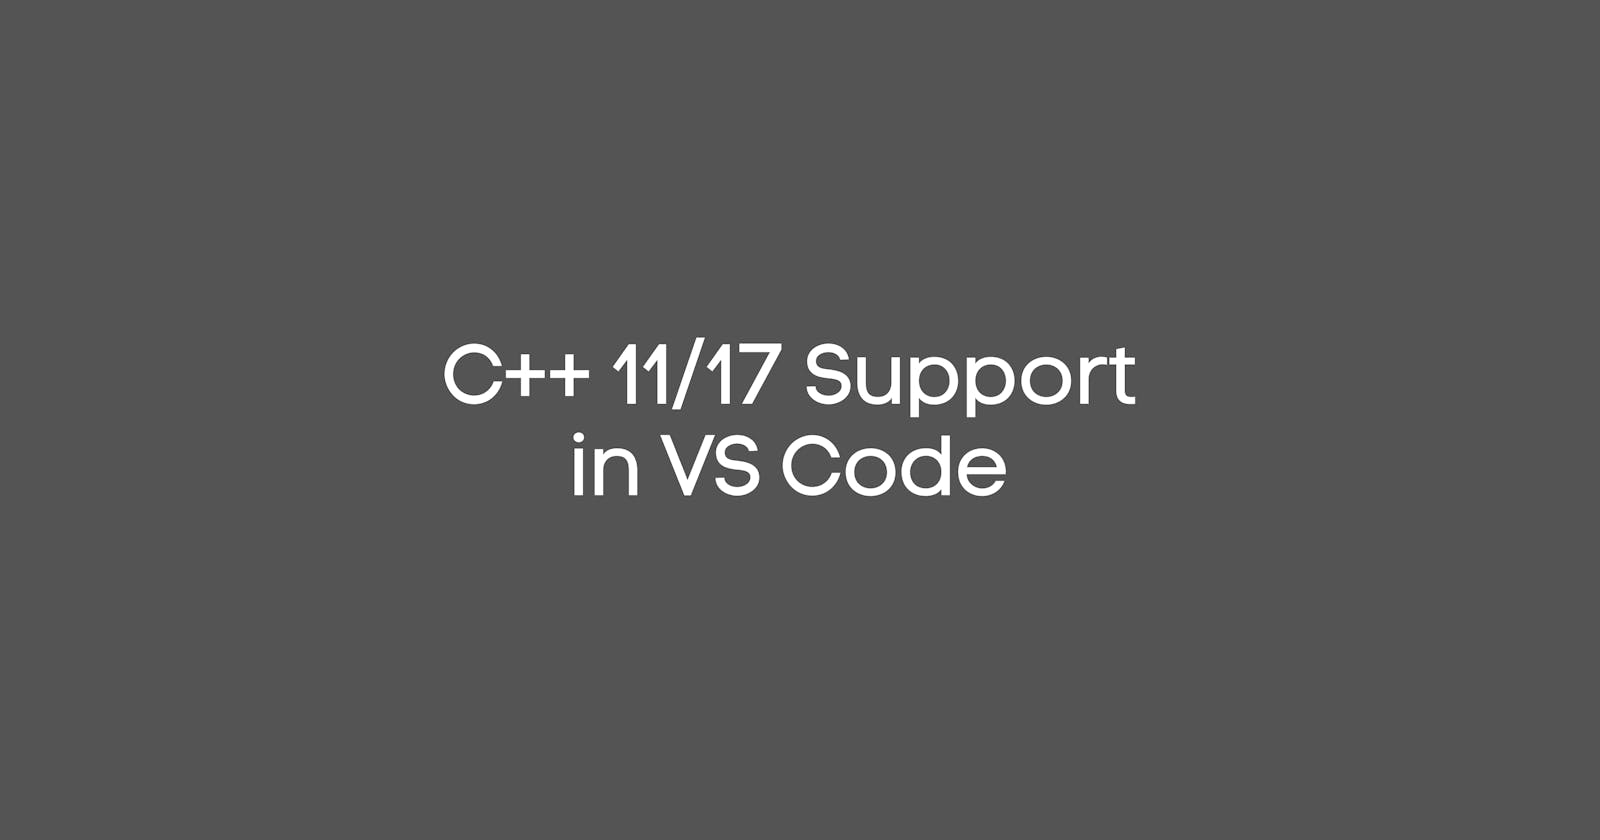 C++ 11/17 Support in VS Code